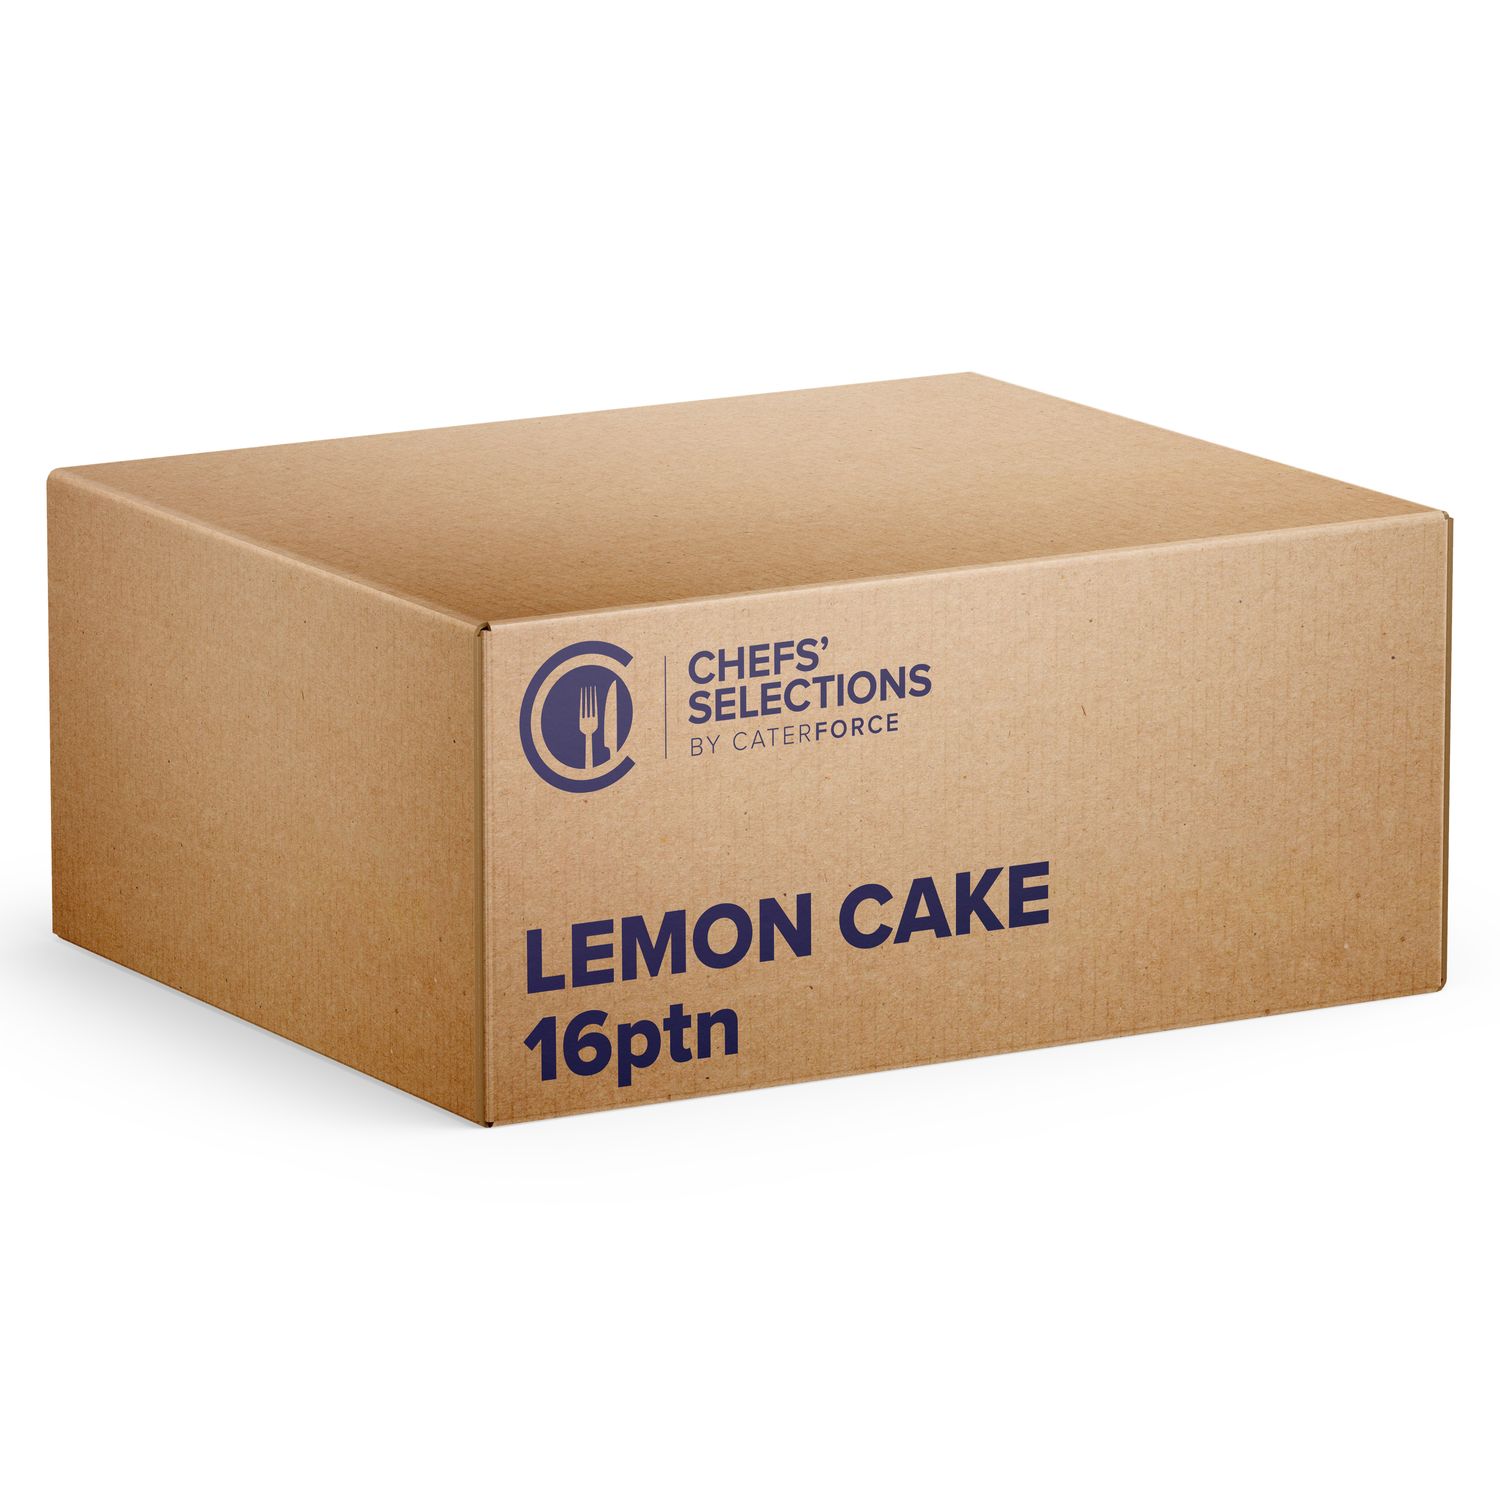 Chefs’ Selections Lemon Cake (1 x 16p/ptn)